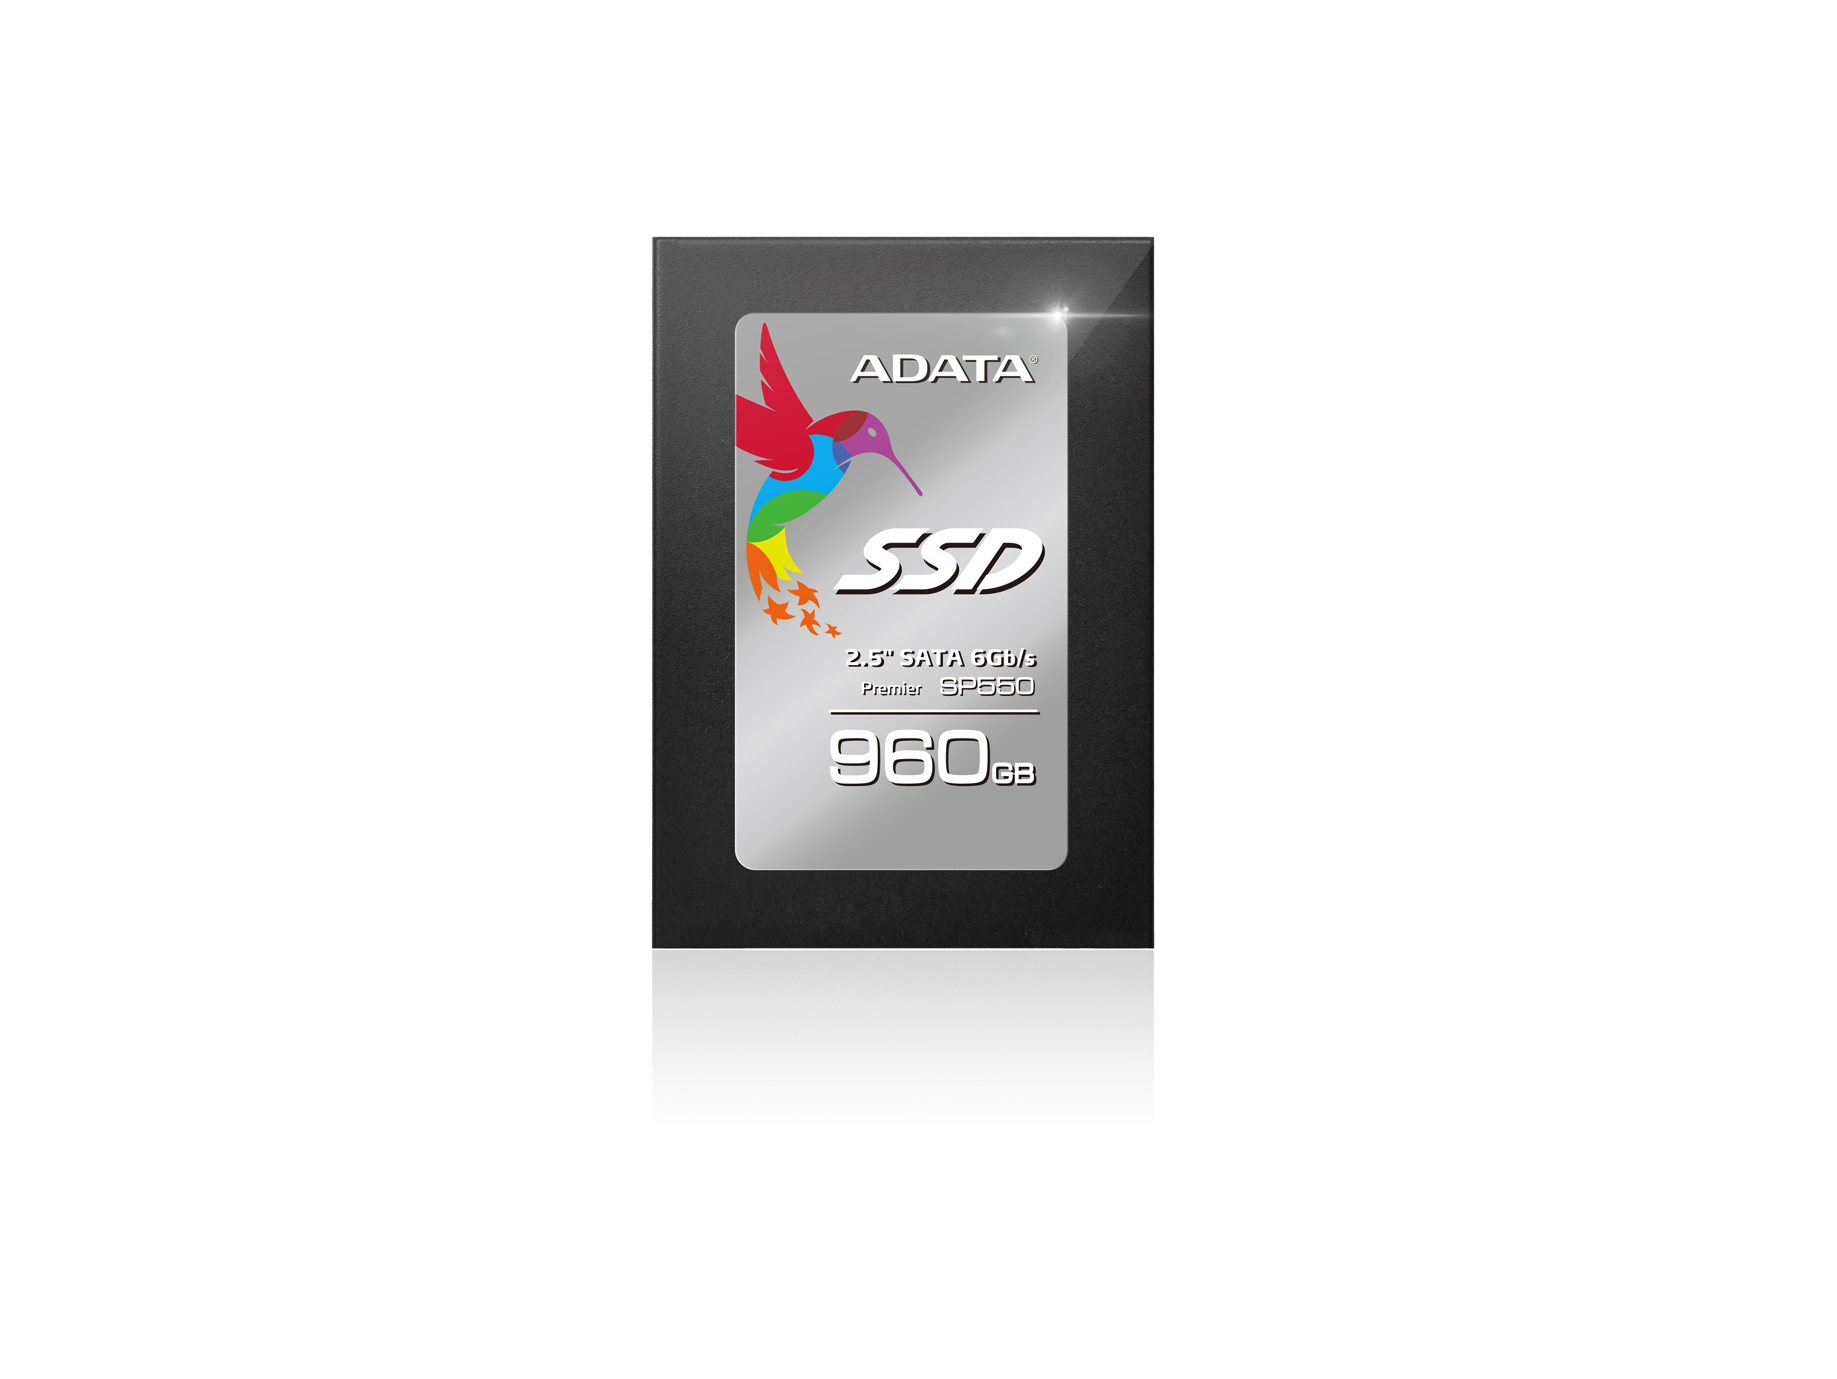 SP550 front 960GB